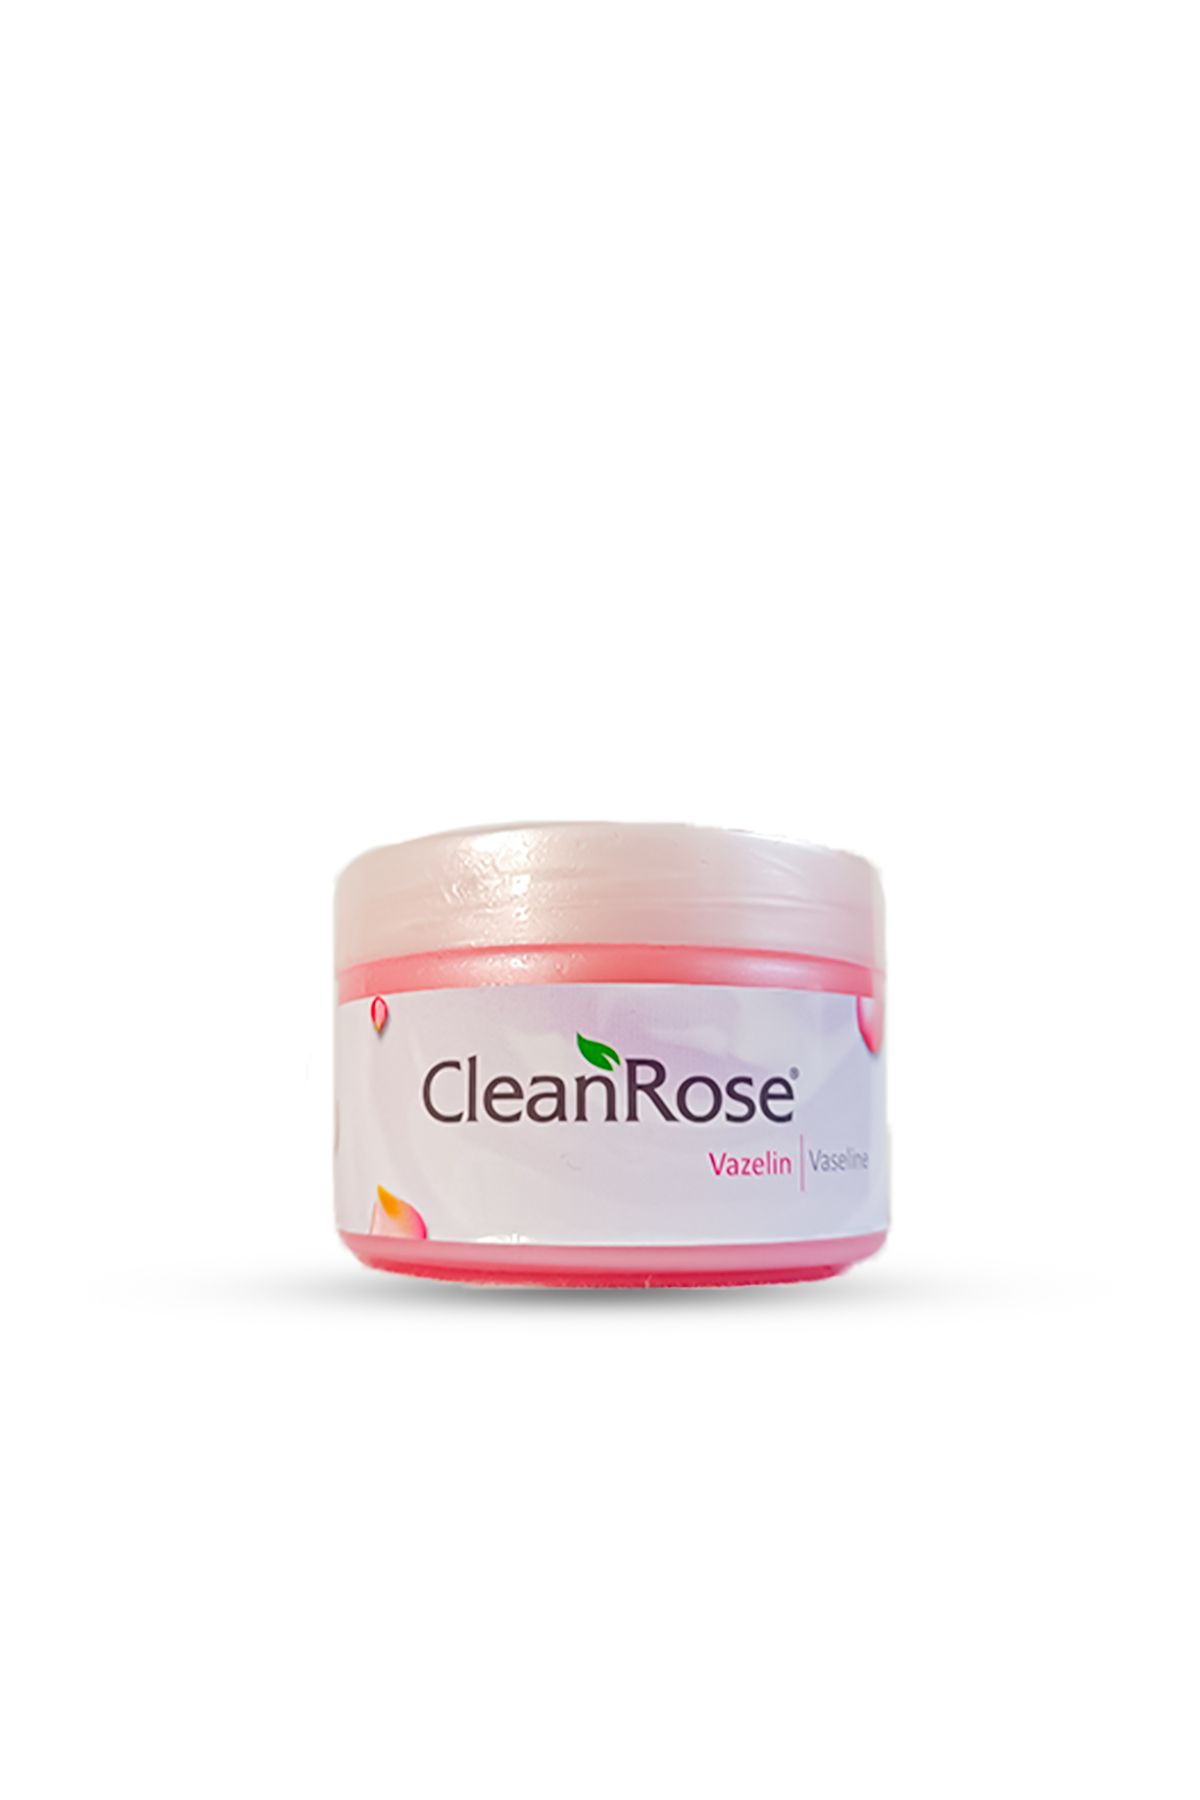 Clean Rose Vazelin